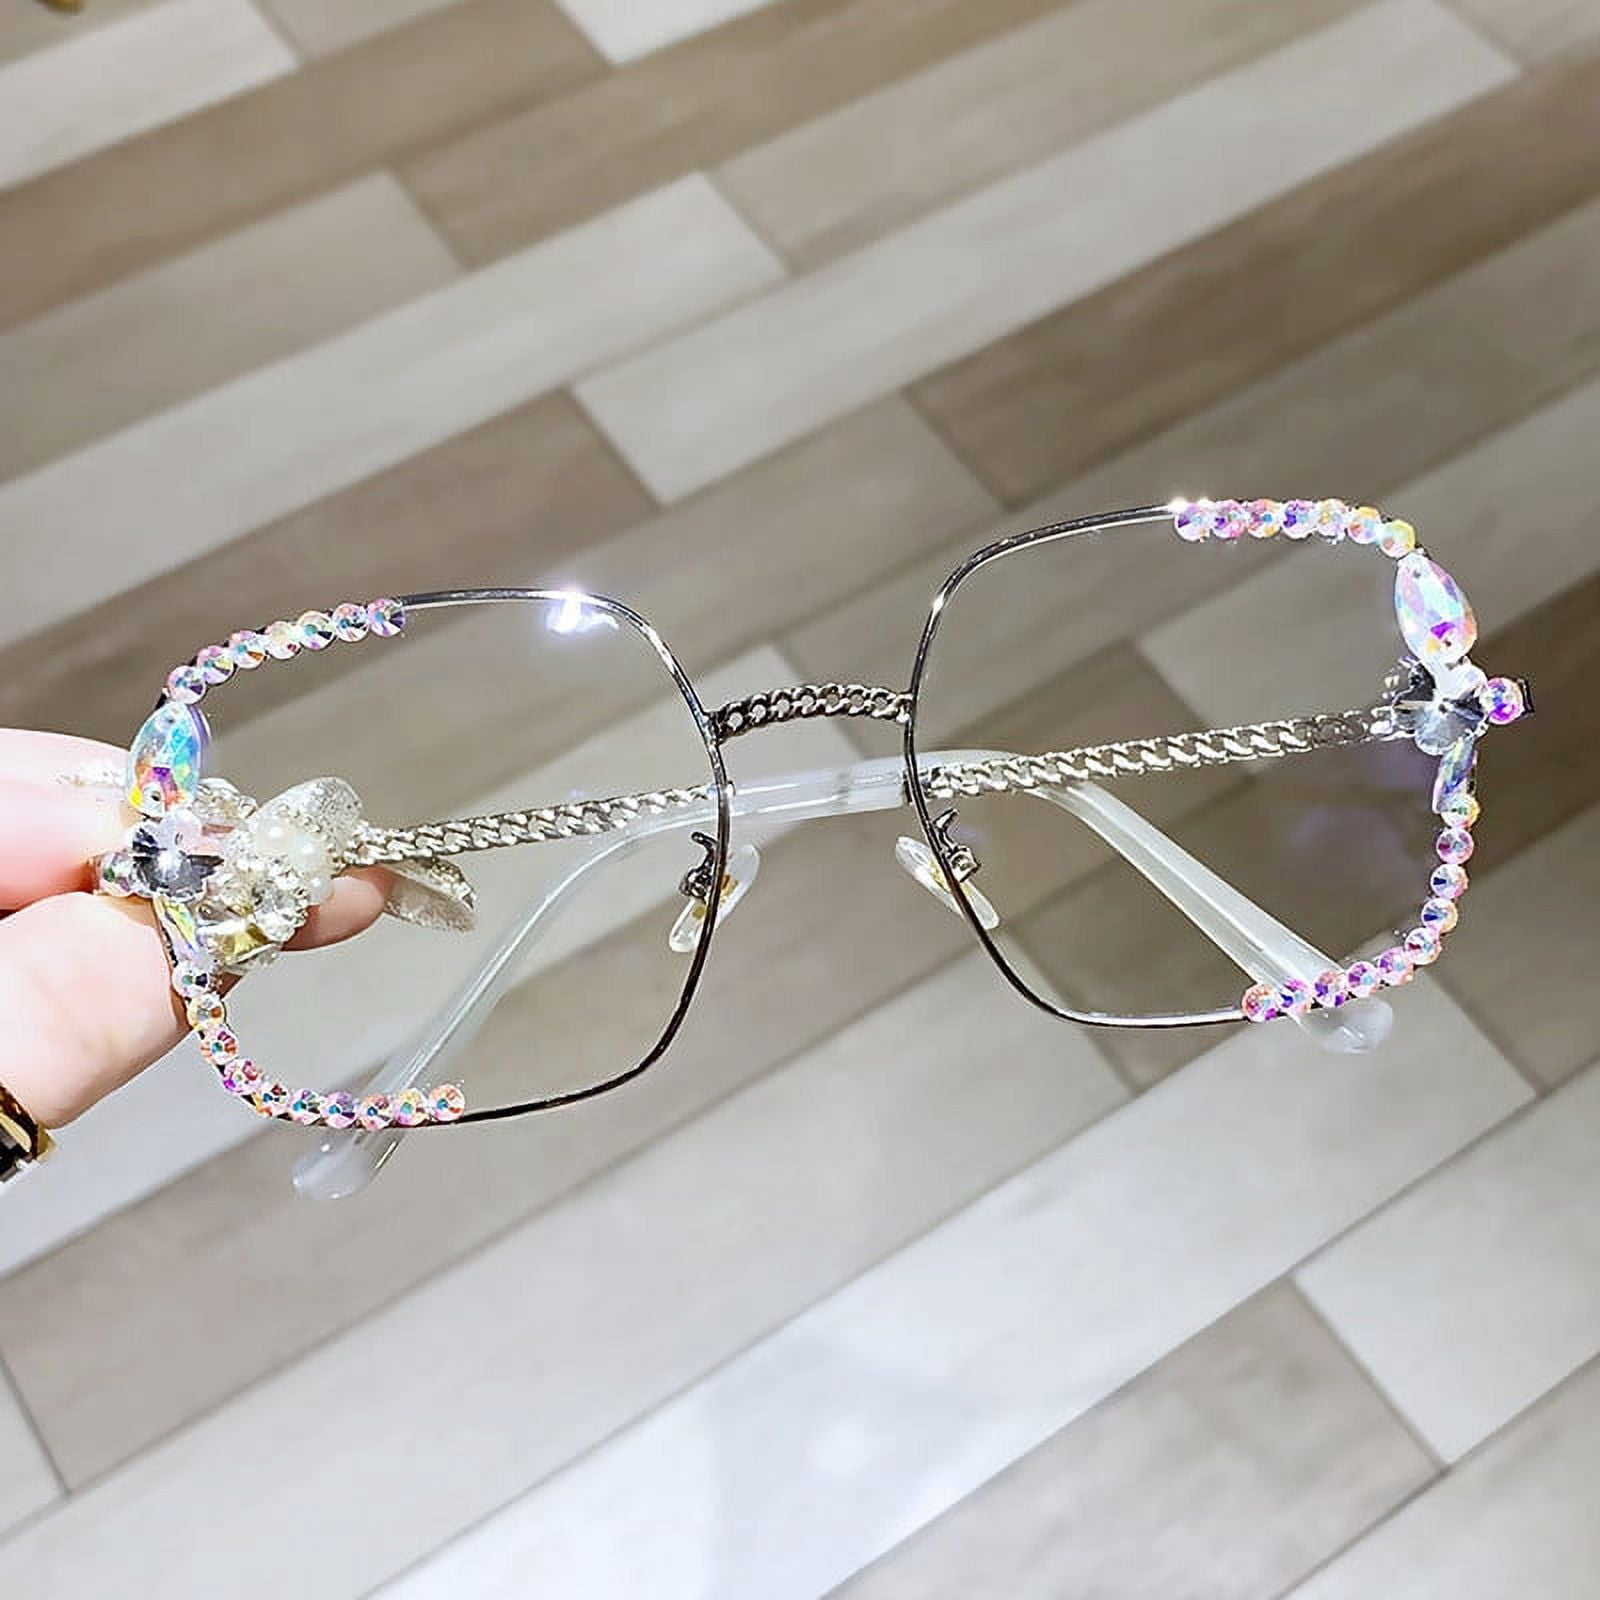 CHANEL, Accessories, Brand New Chanel Glasses